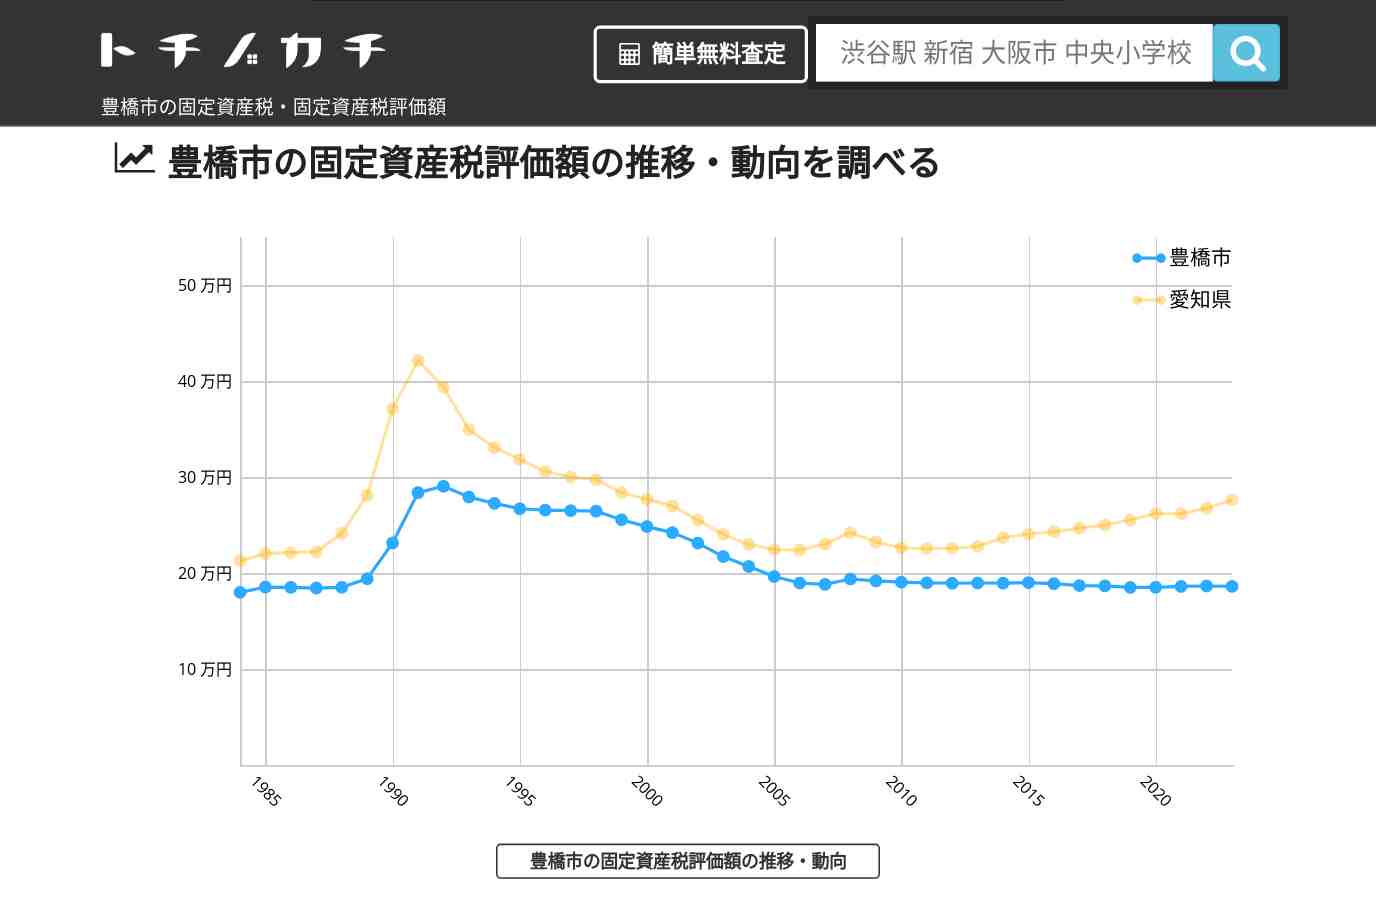 多米小学校(愛知県 豊橋市)周辺の固定資産税・固定資産税評価額 | トチノカチ